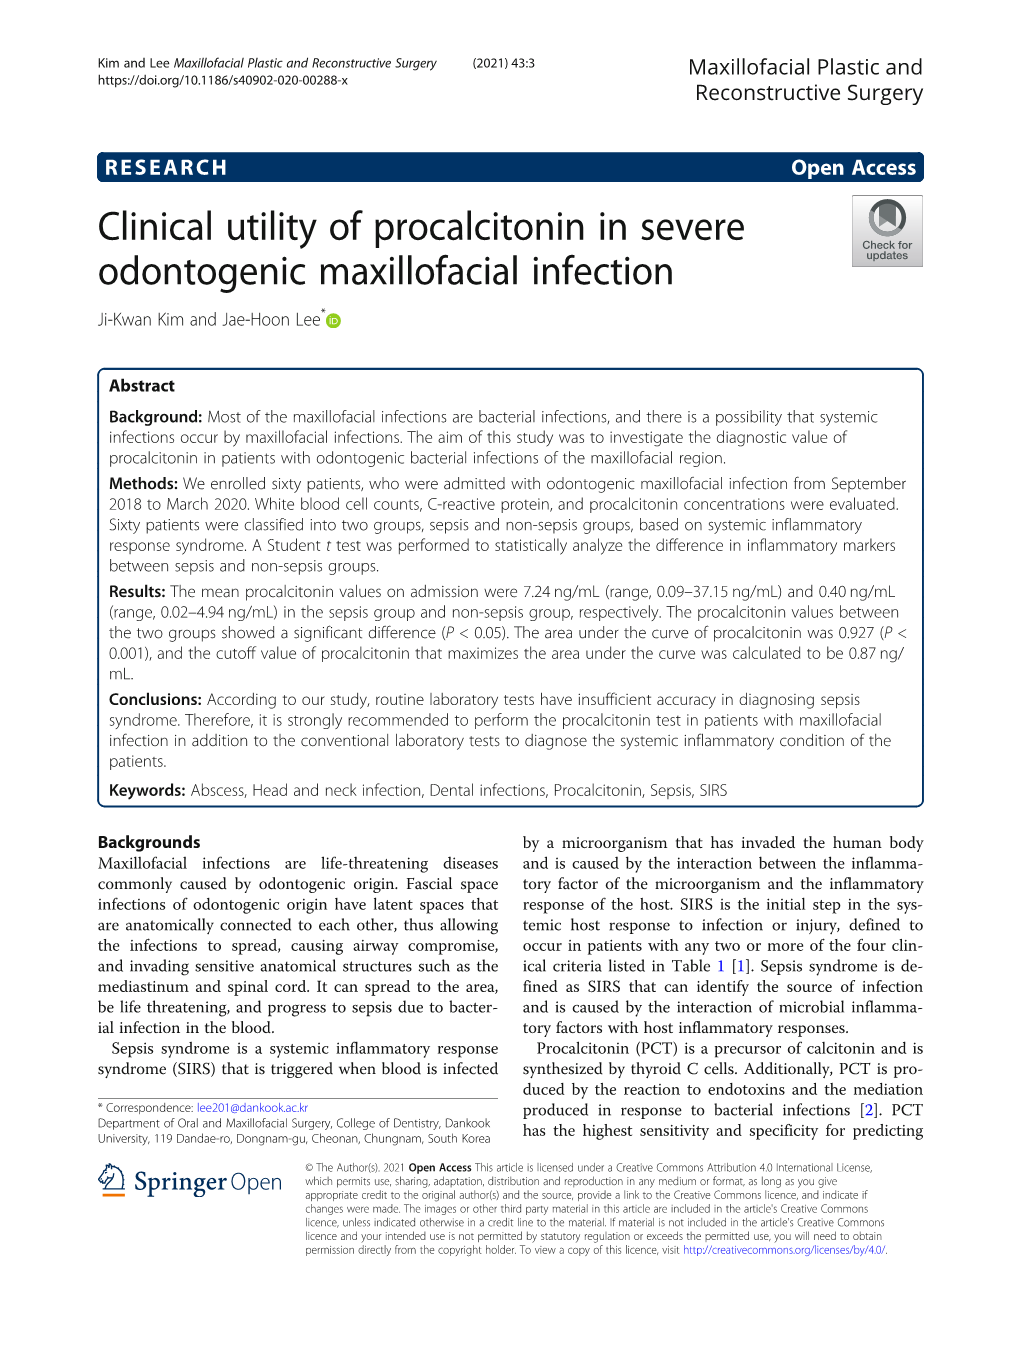 Clinical Utility of Procalcitonin in Severe Odontogenic Maxillofacial Infection Ji-Kwan Kim and Jae-Hoon Lee*